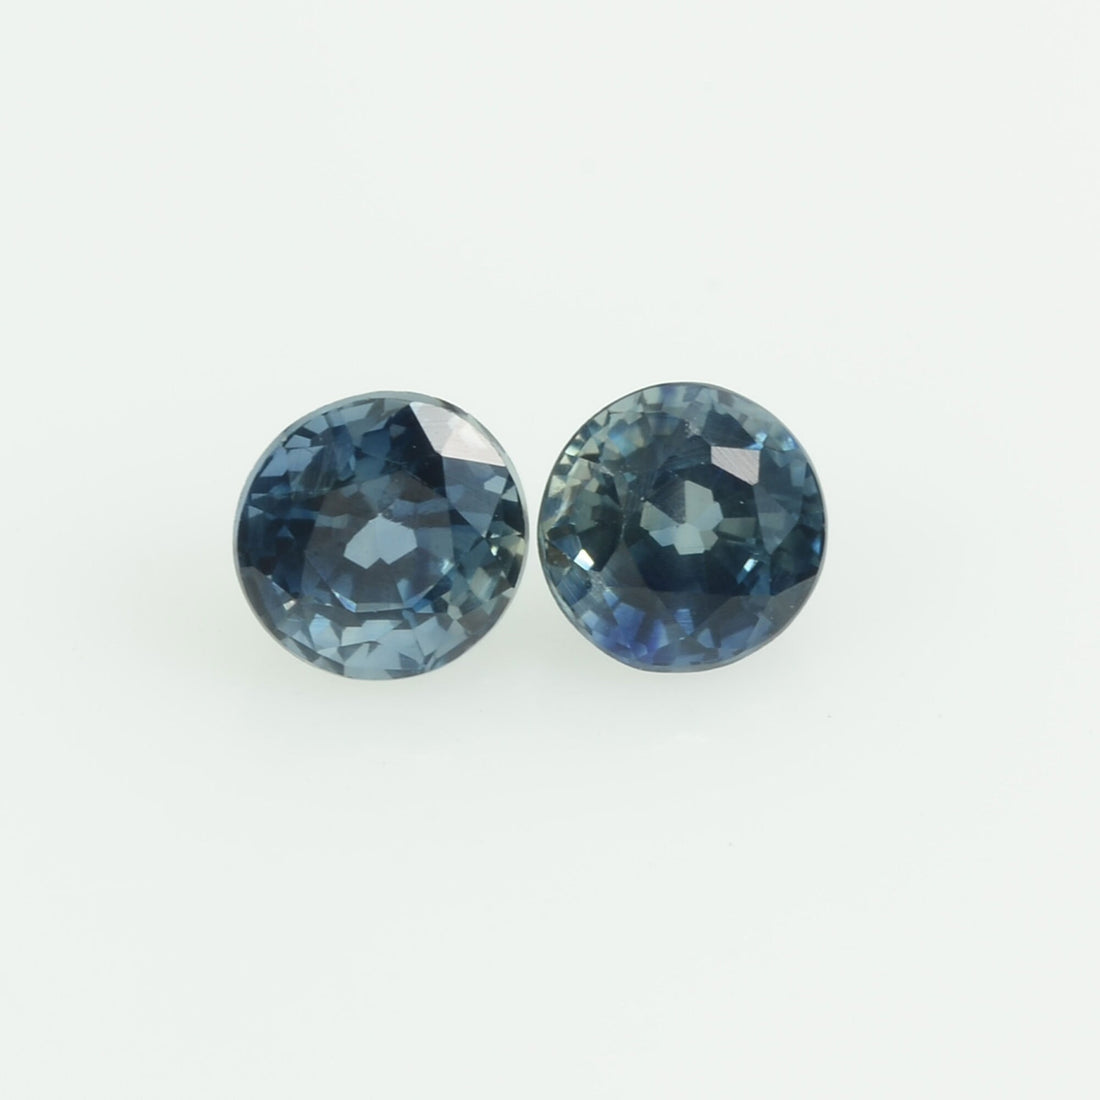 3.5 mmNatural Blue Sapphire Loose Gemstone Round Cut